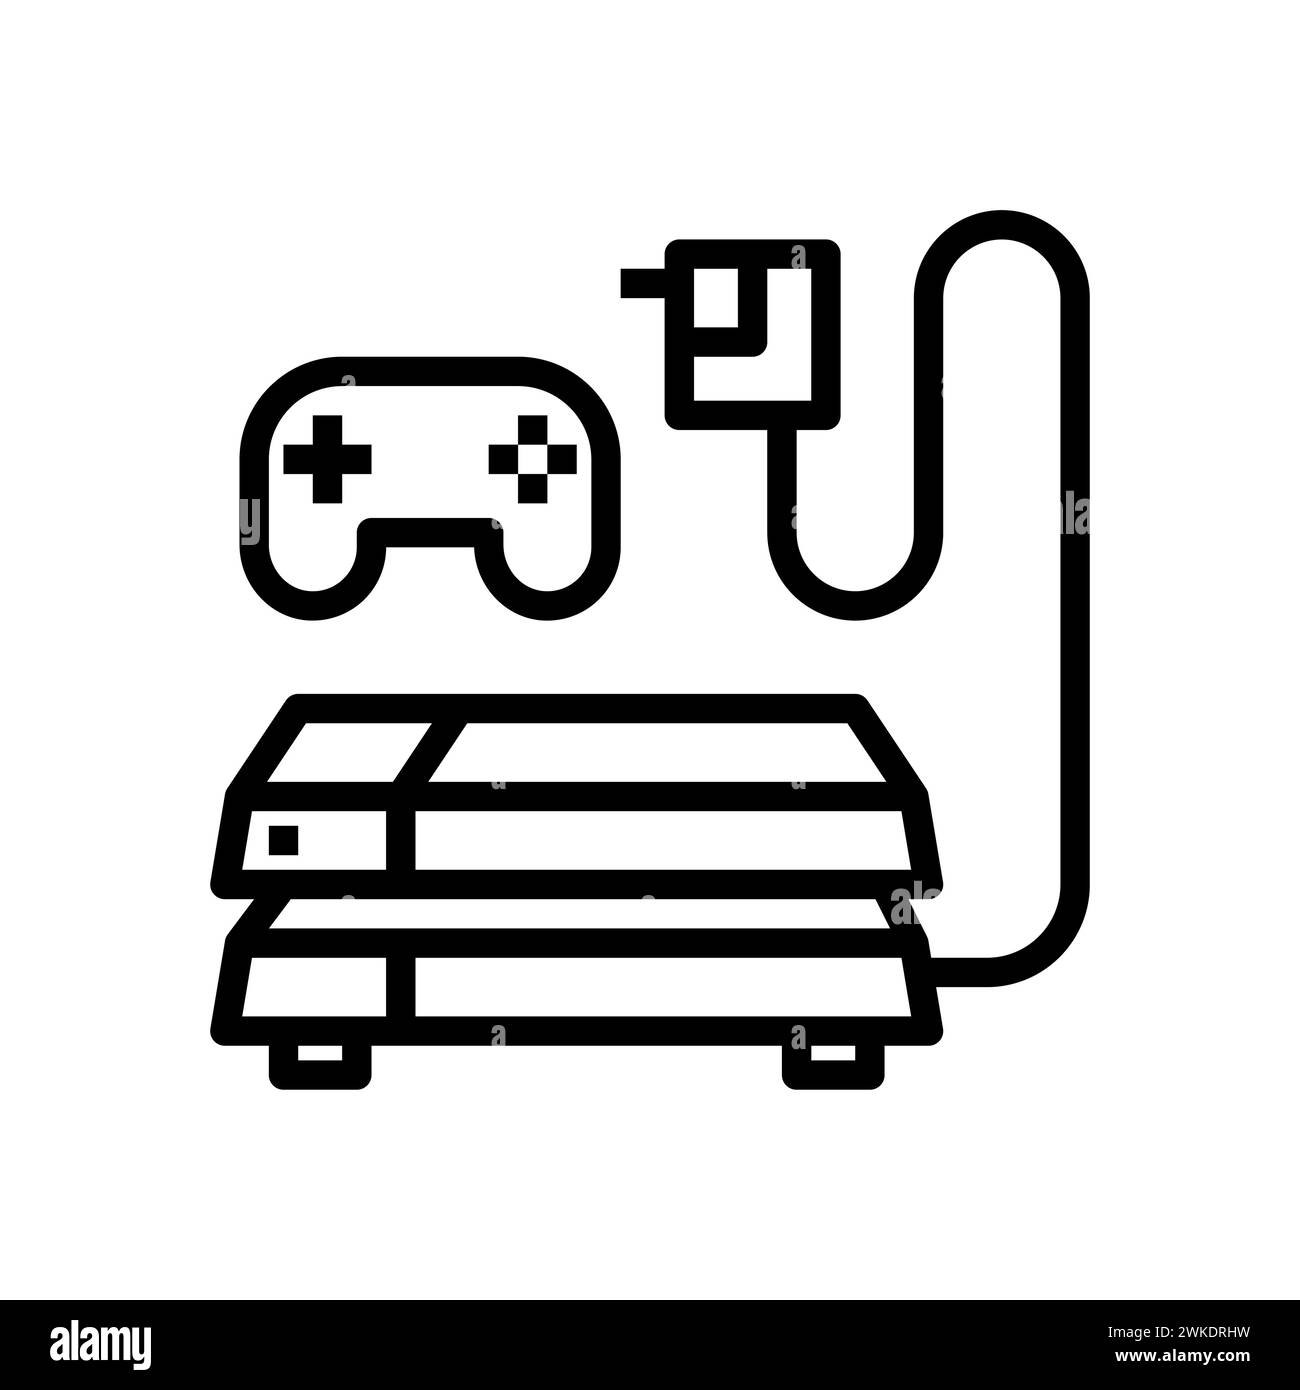 Art illustration symbol icon furniture logo household design sketch hand draw of video game media Stock Vector